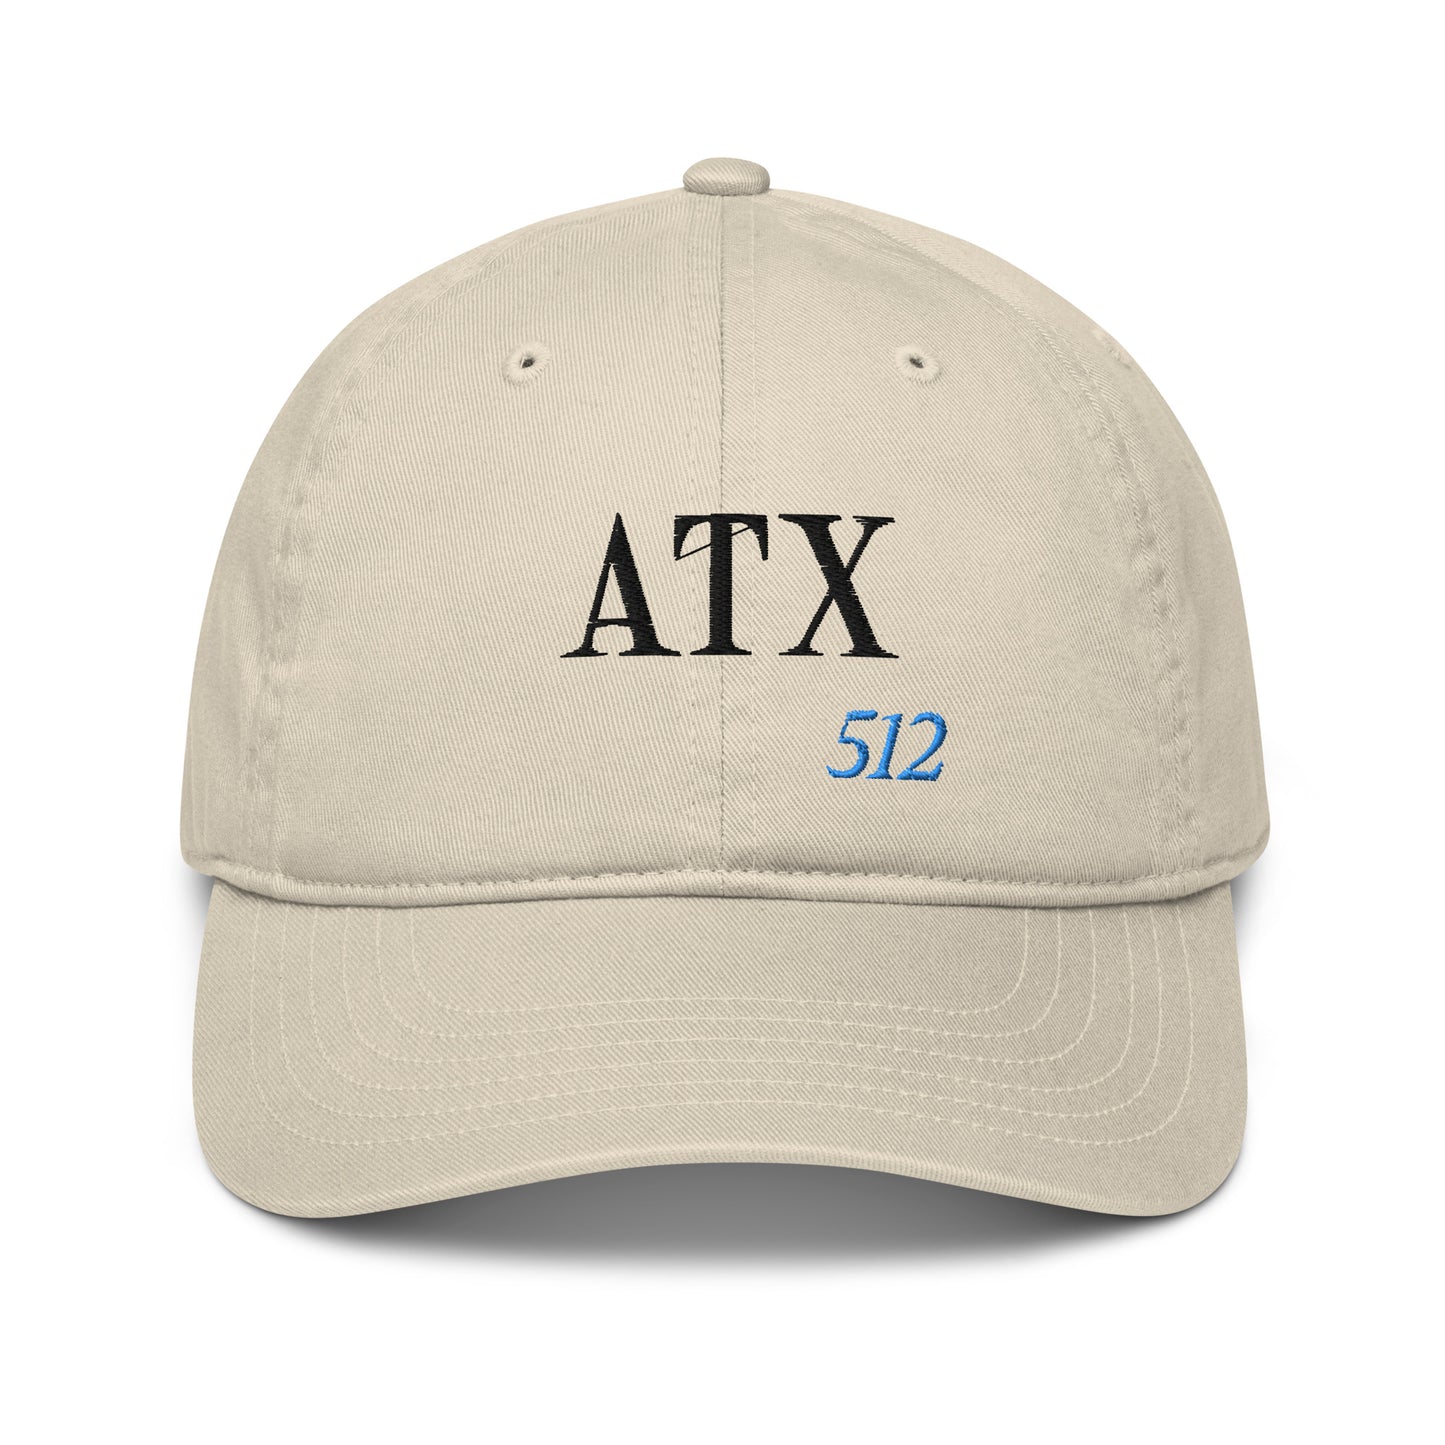 ATX 512 Organic Cotton dad hat